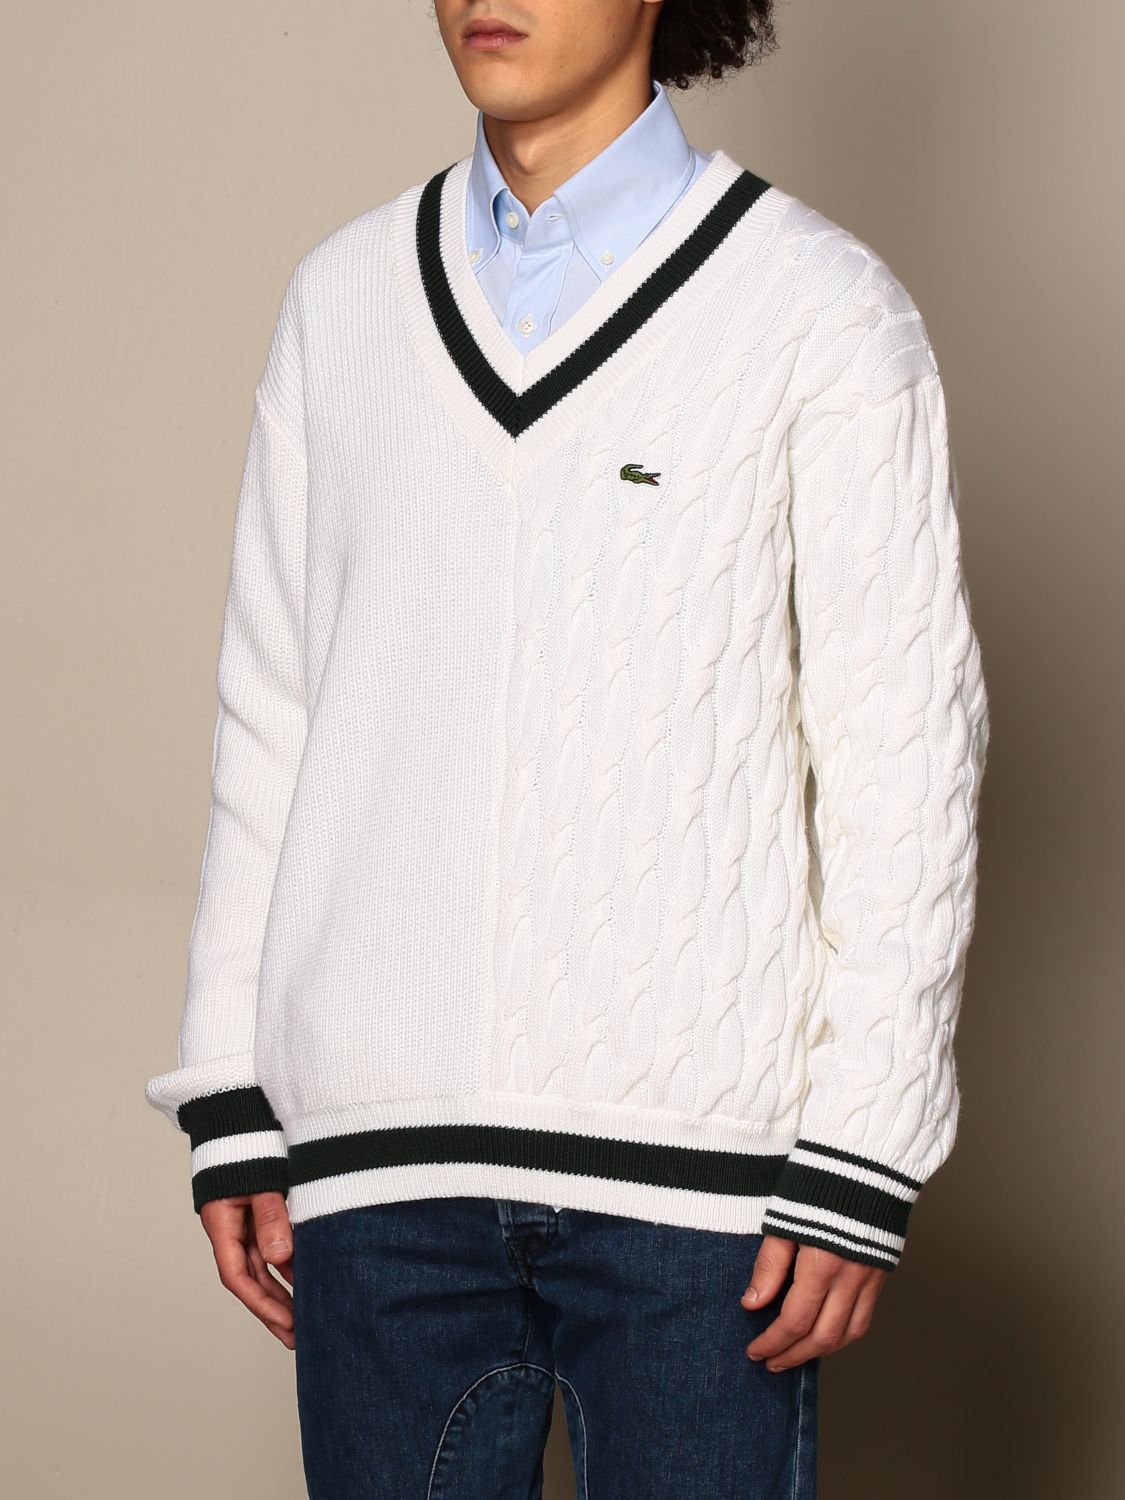 L!VE: Lacoste L! Ve v-neck sweater in wool blend logo - White | Lacoste L!Ve sweater AH1226 online at GIGLIO.COM